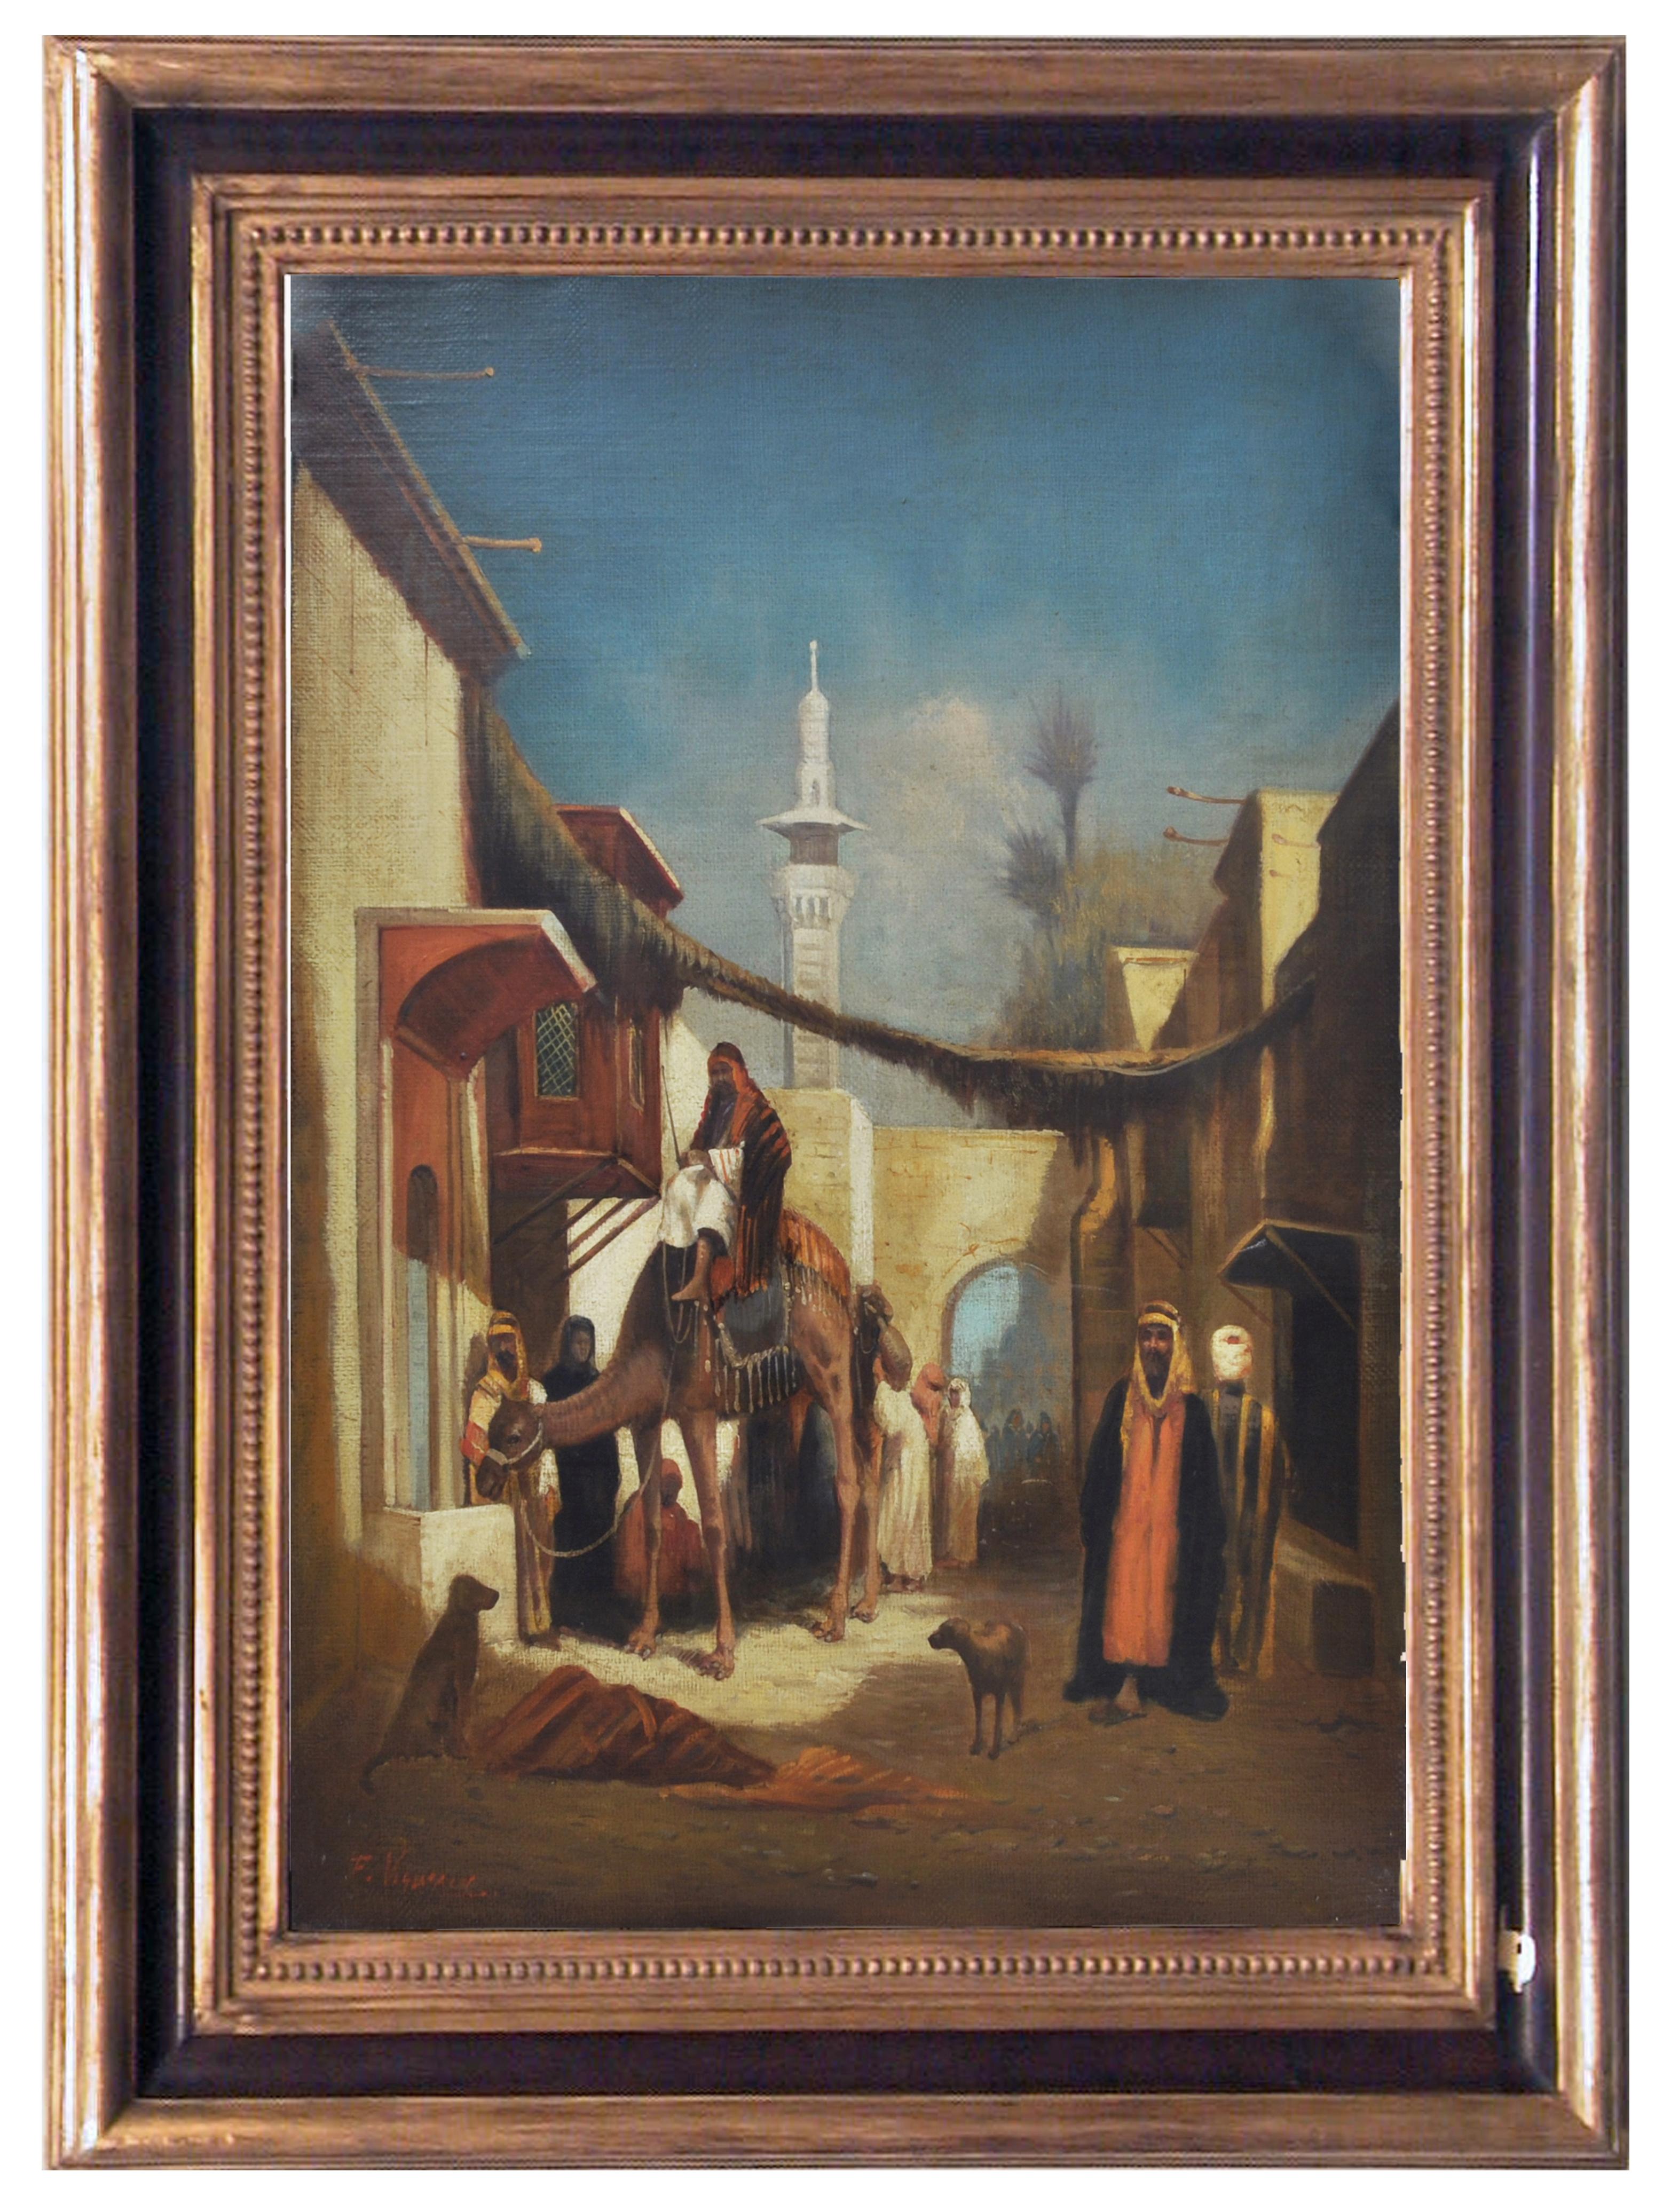 ARABIAN SCENE - Vigneron landscape oil on canvas painting